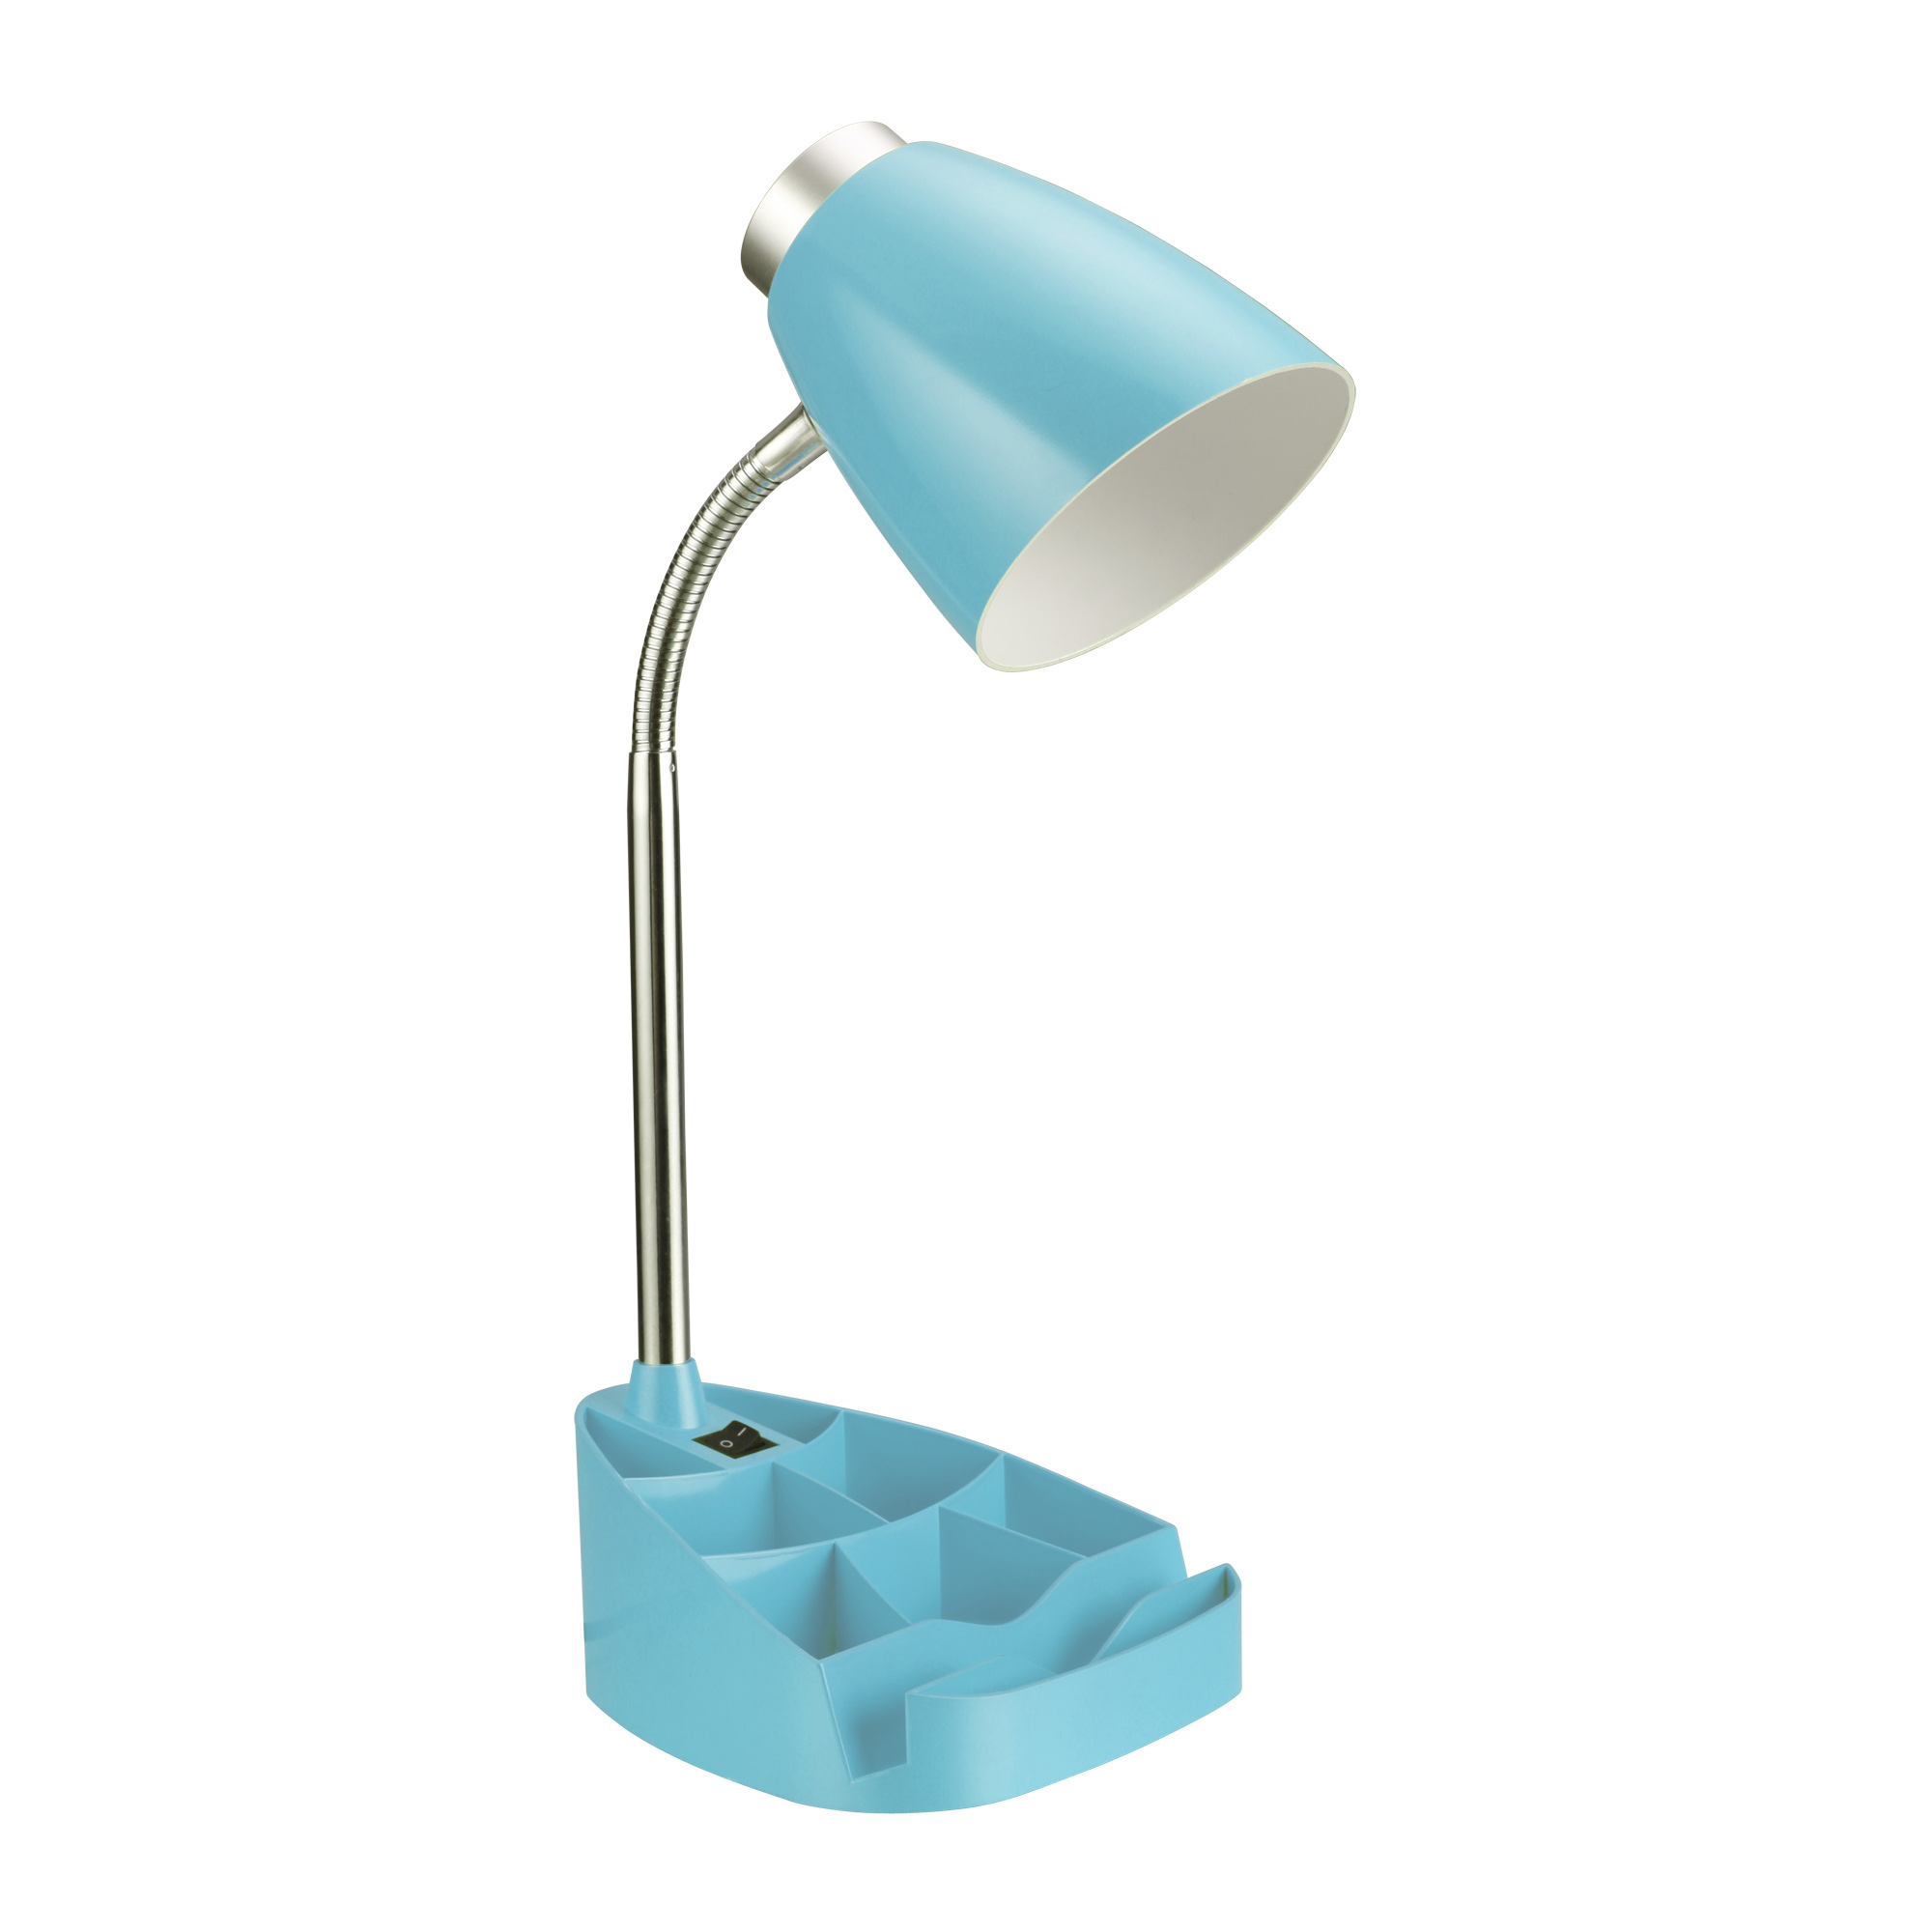 Limelights Gooseneck Organizer Desk Lamp with iPad Tablet Stand Book Holder, Blue